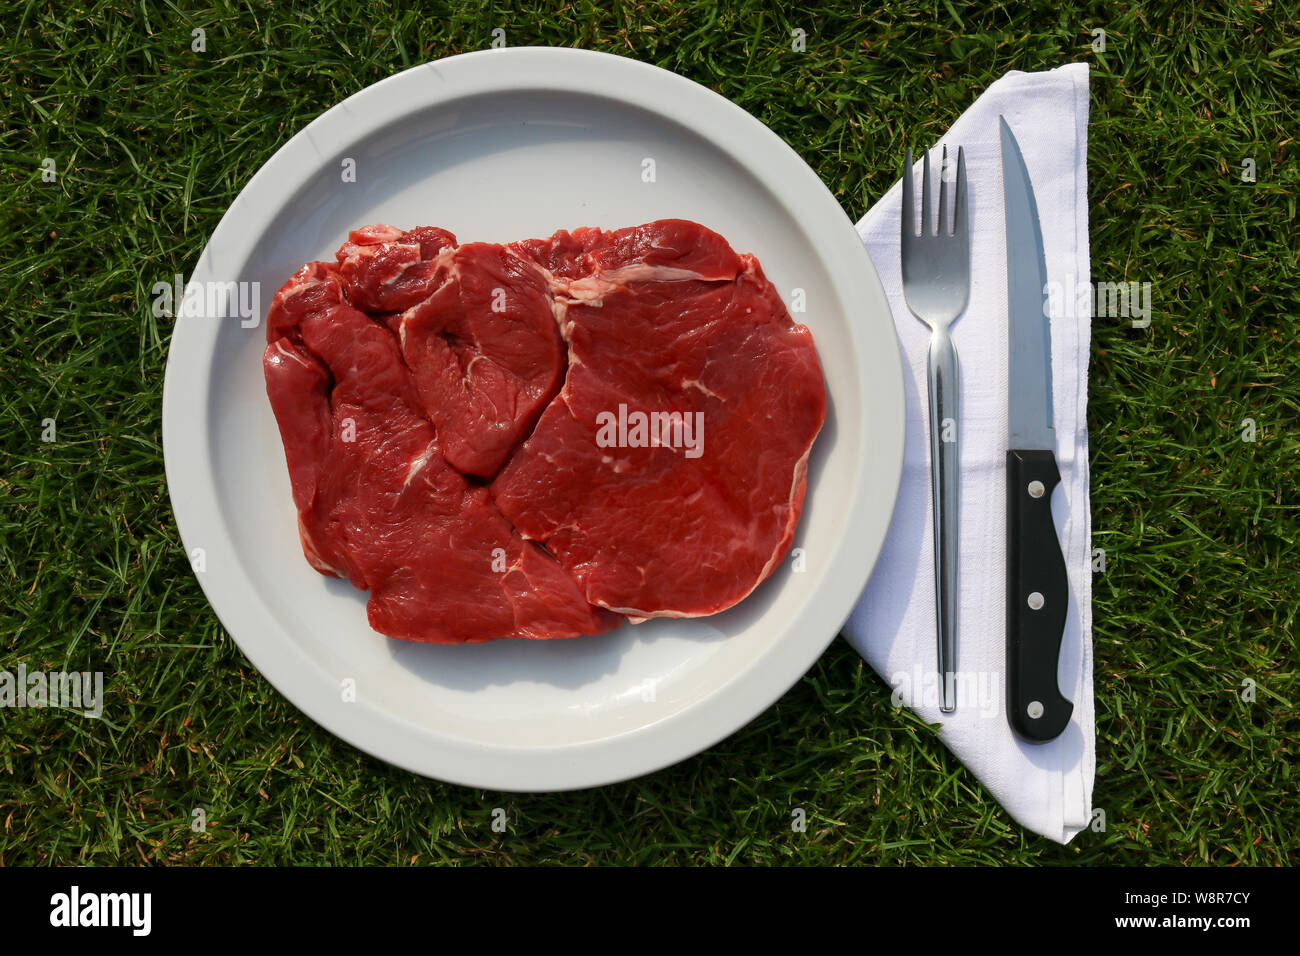 Carnivore diet rib eye steak Stock Photo